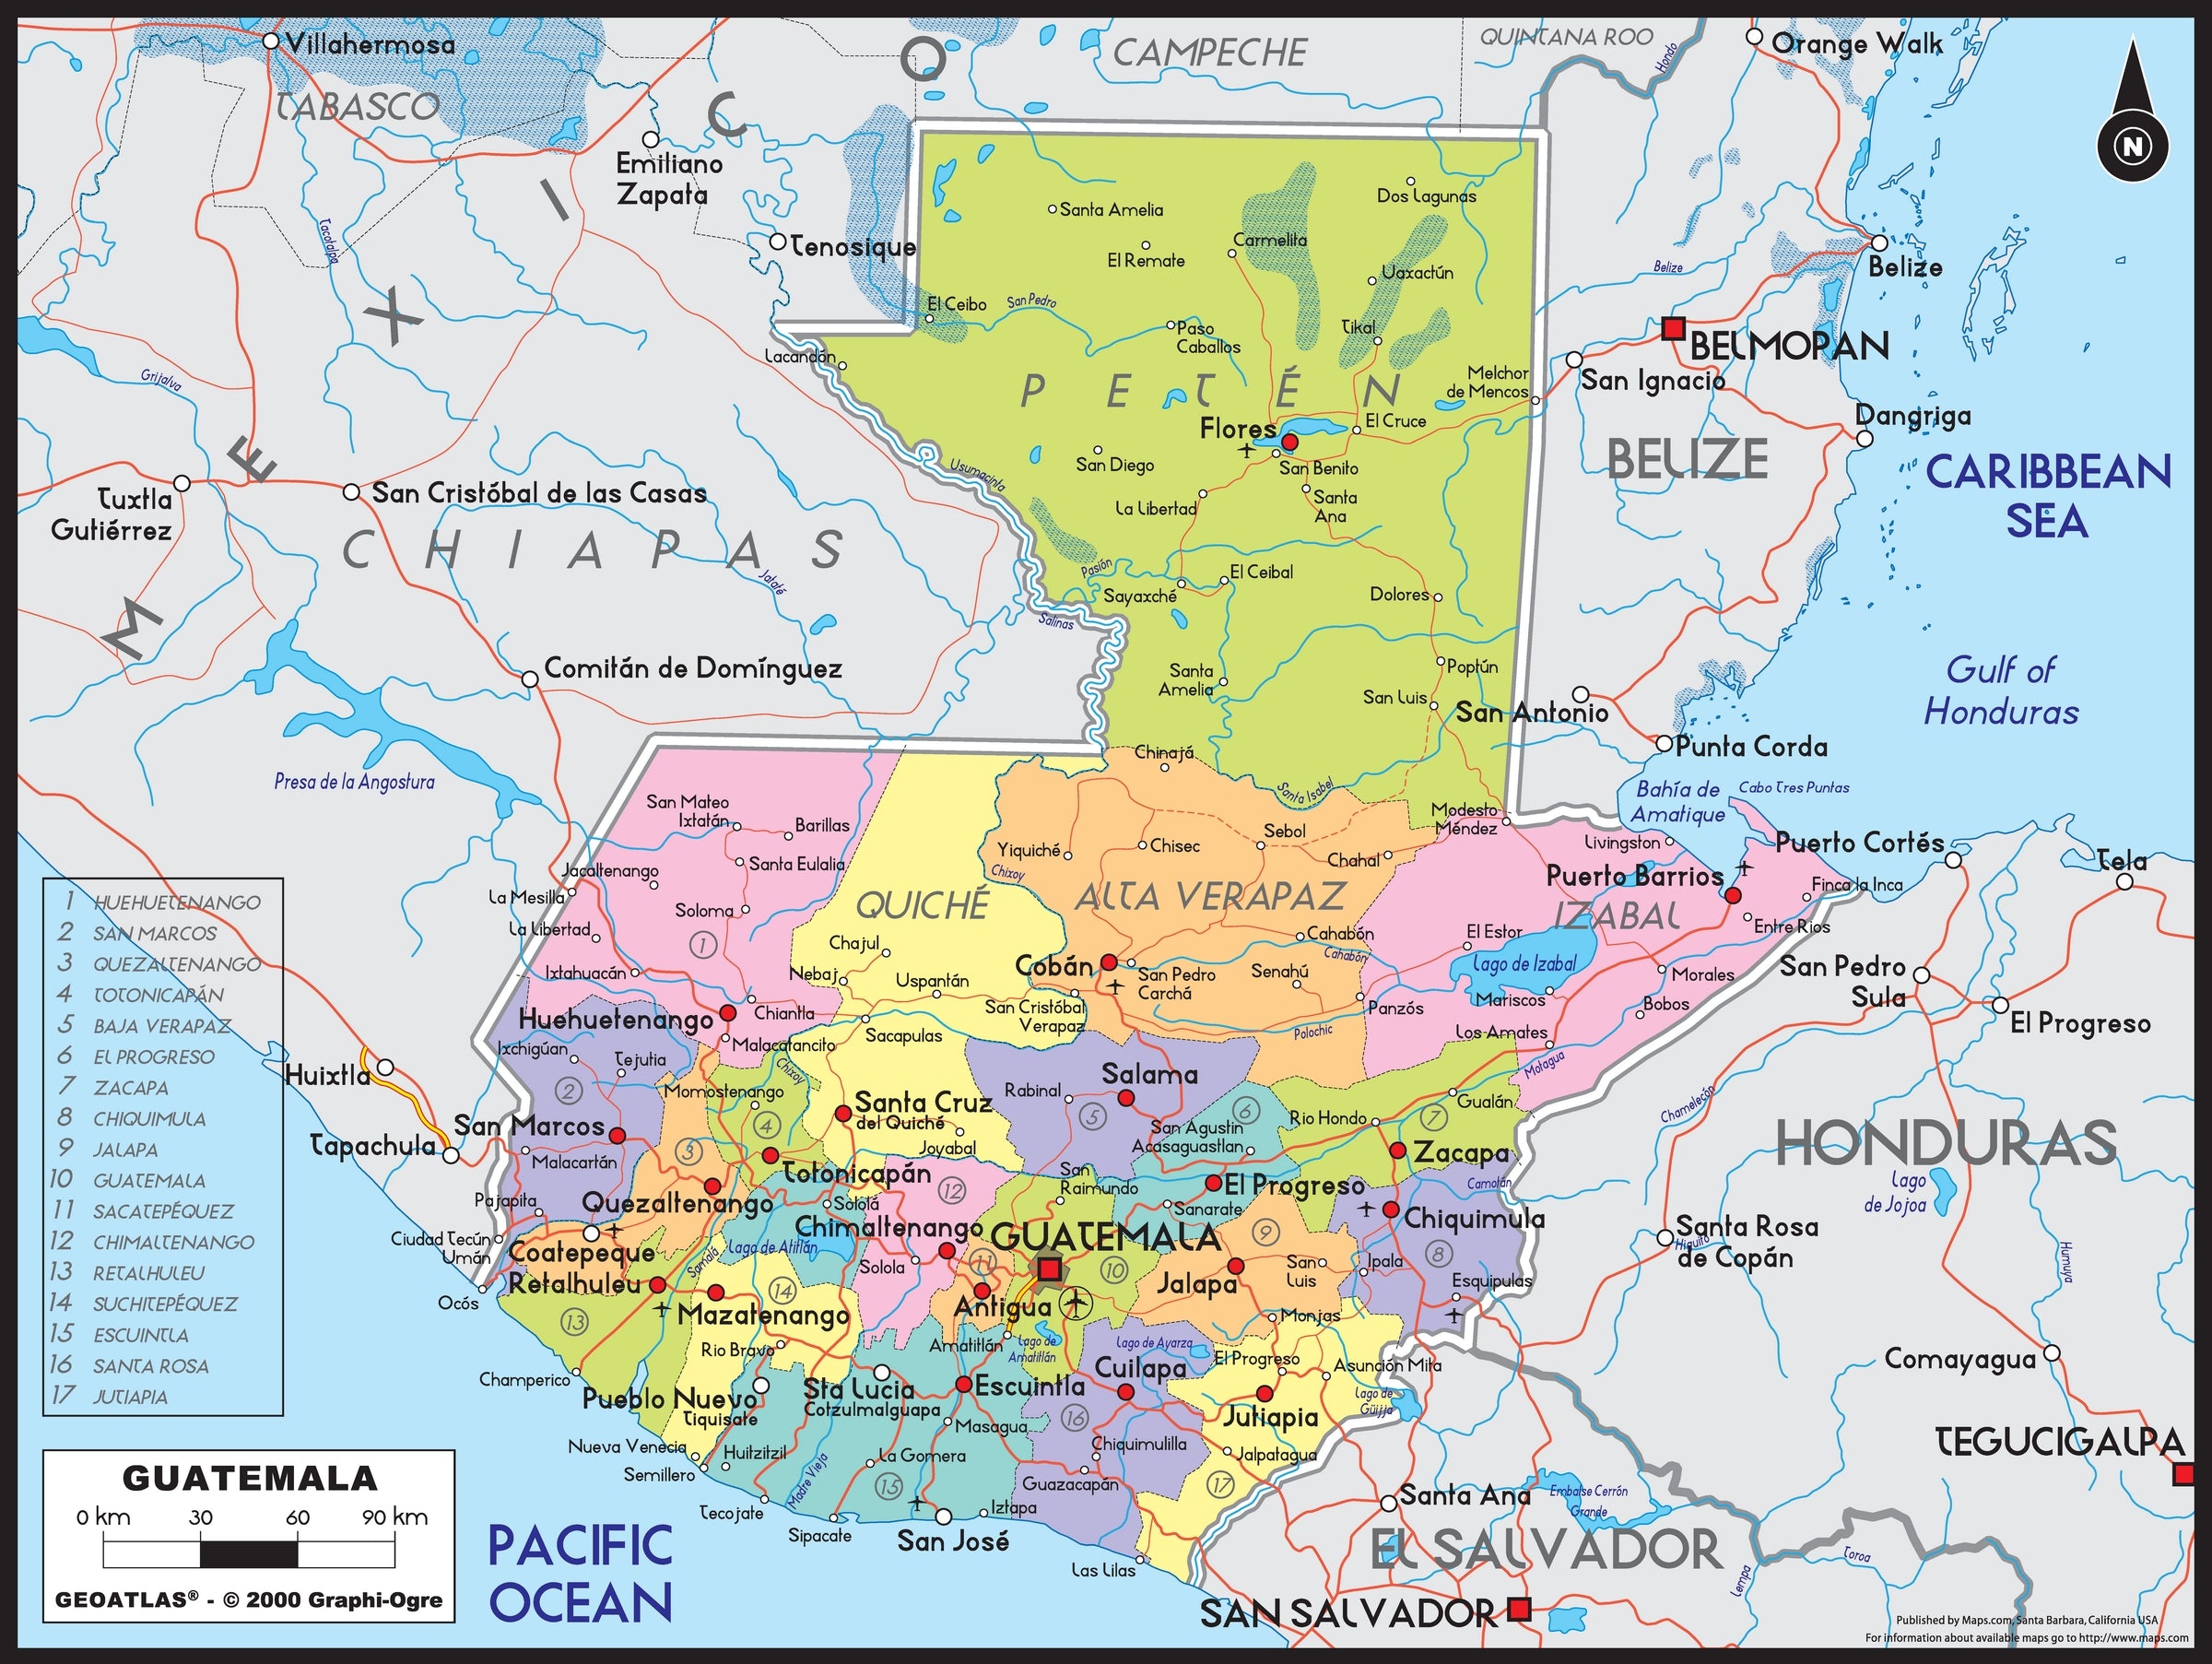 Political Map Of Guatemala